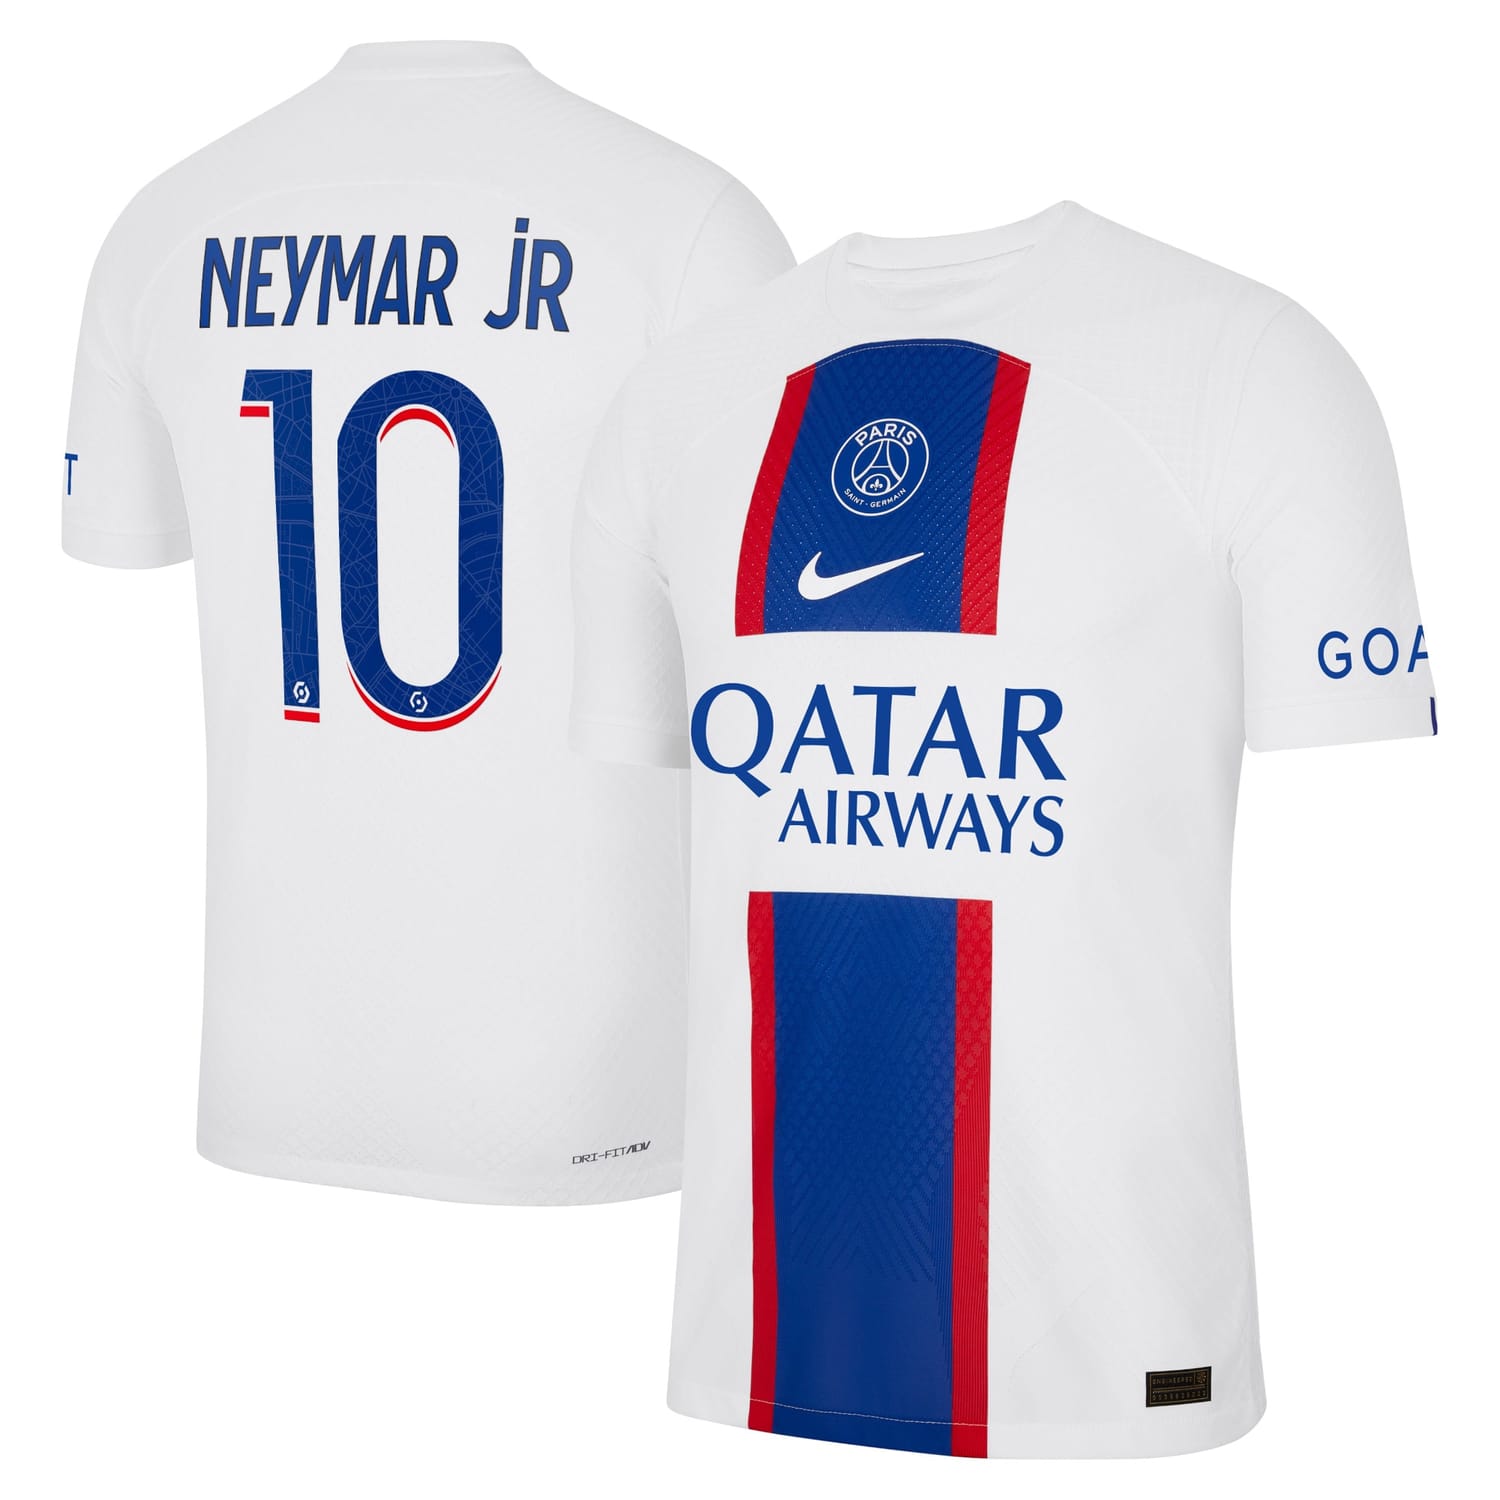 Ligue 1 Paris Saint-Germain Third Authentic Jersey Shirt 2022-23 player Neymar Jr. 10 printing for Men